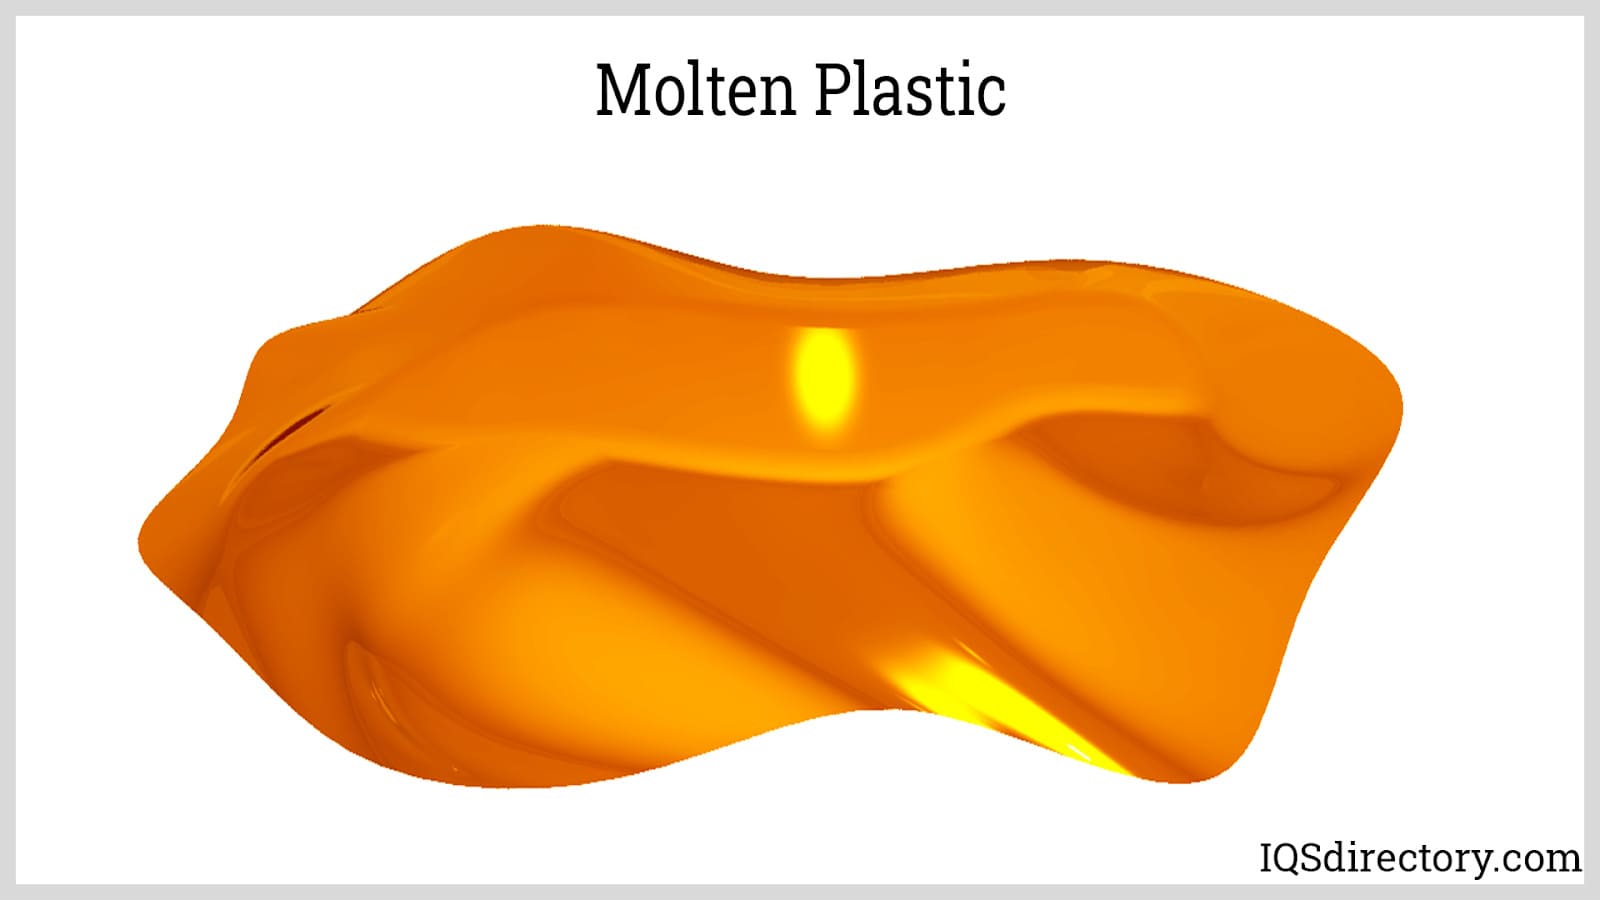 Molten Plastic